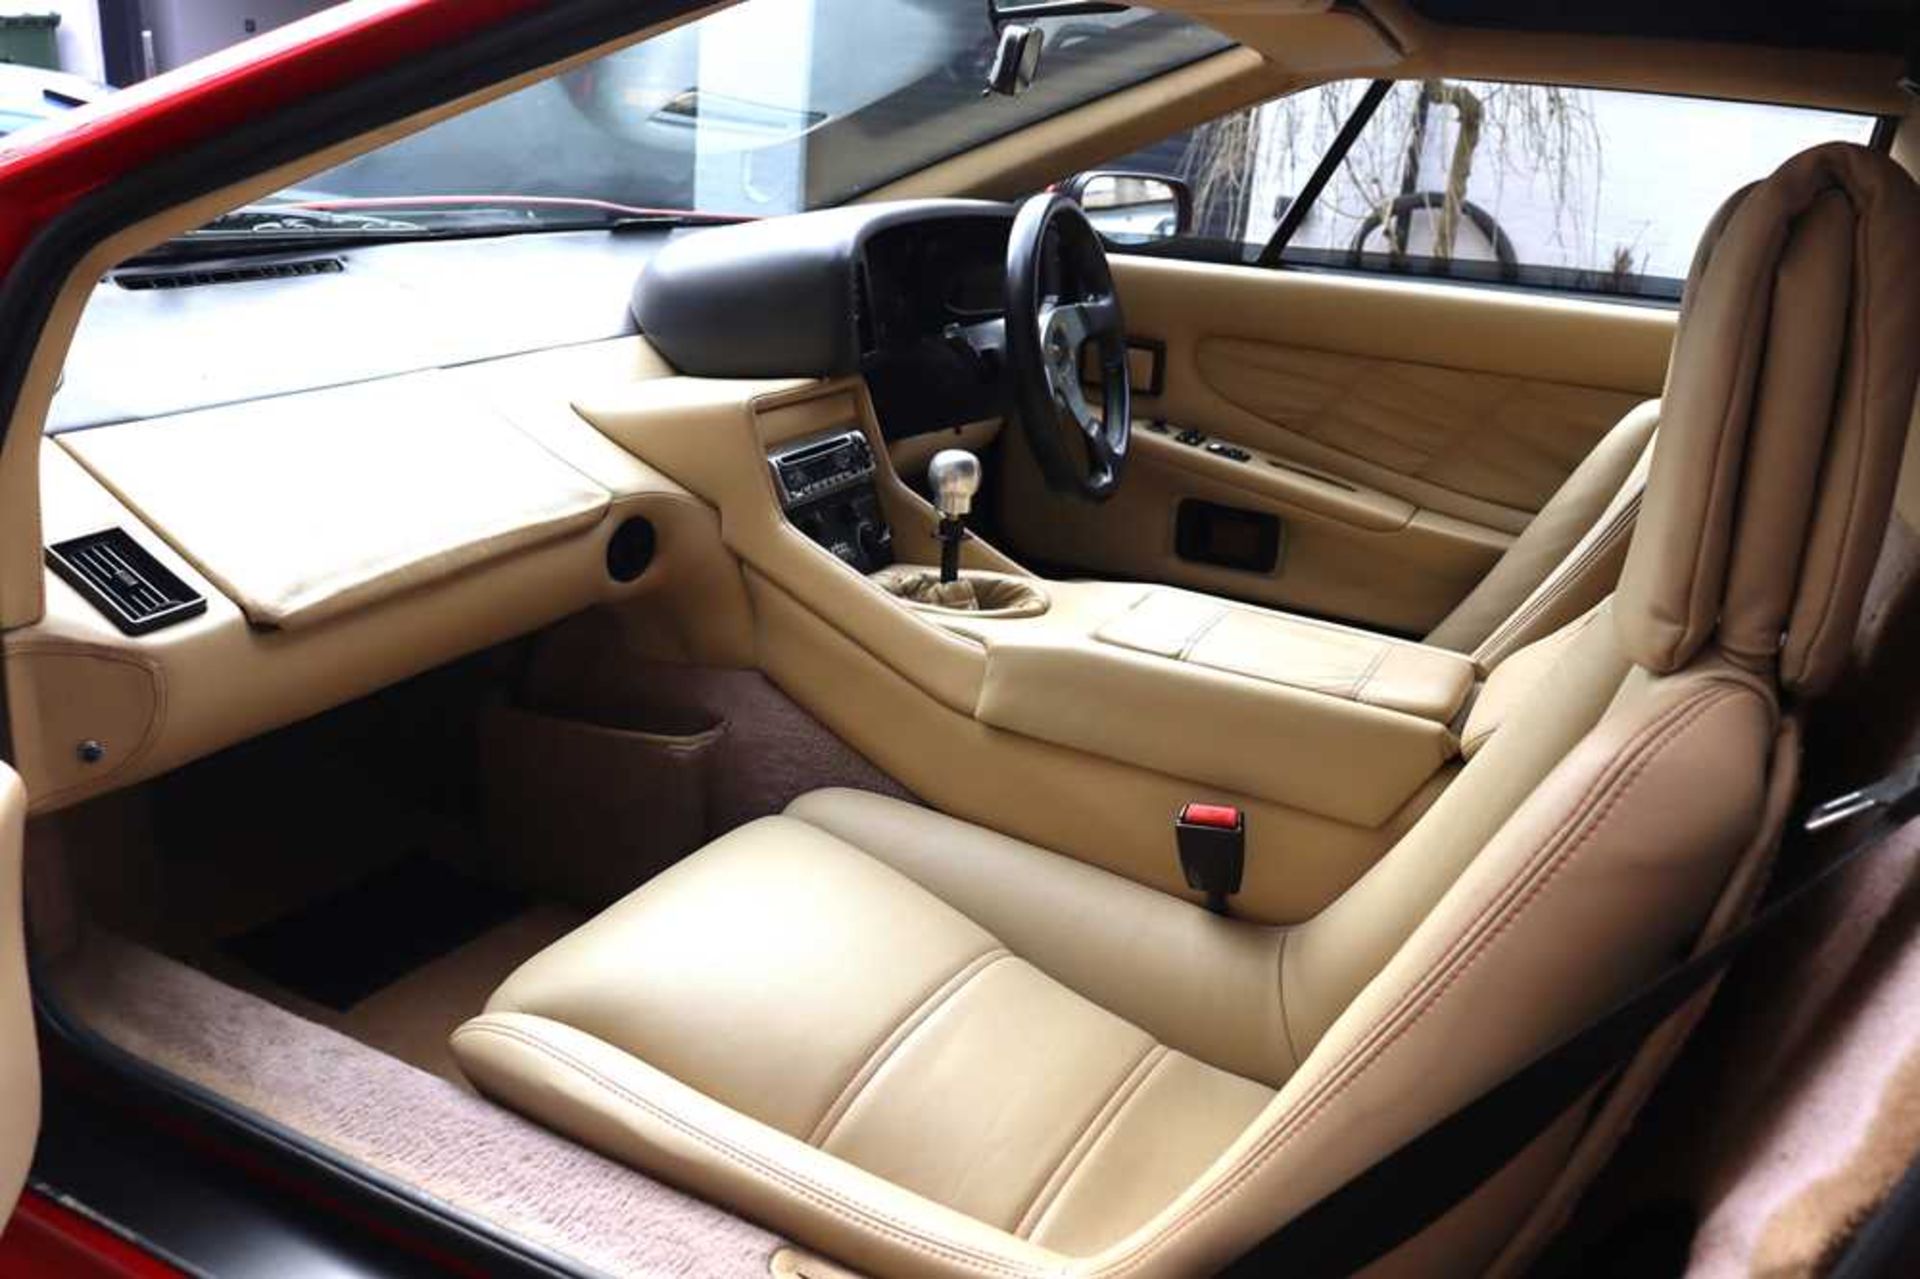 1989 Lotus Esprit Turbo Just 37,000 recorded miles - Image 46 of 72